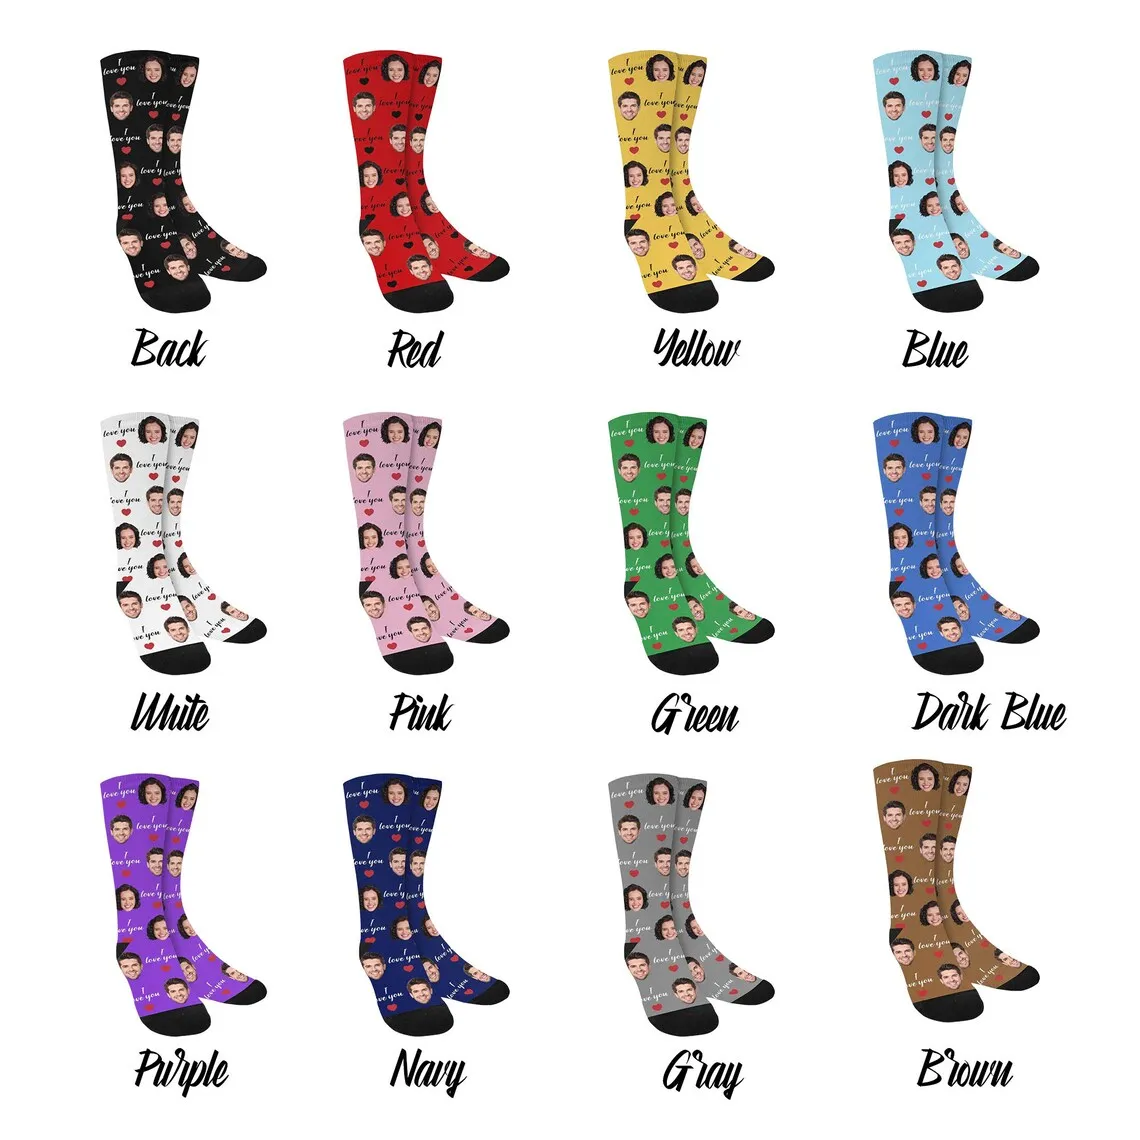 Custom Face Socks Personalized Socks For Women Men Custom Color Socks With Faces Text I Love You Anniversary/ Wedding Gift